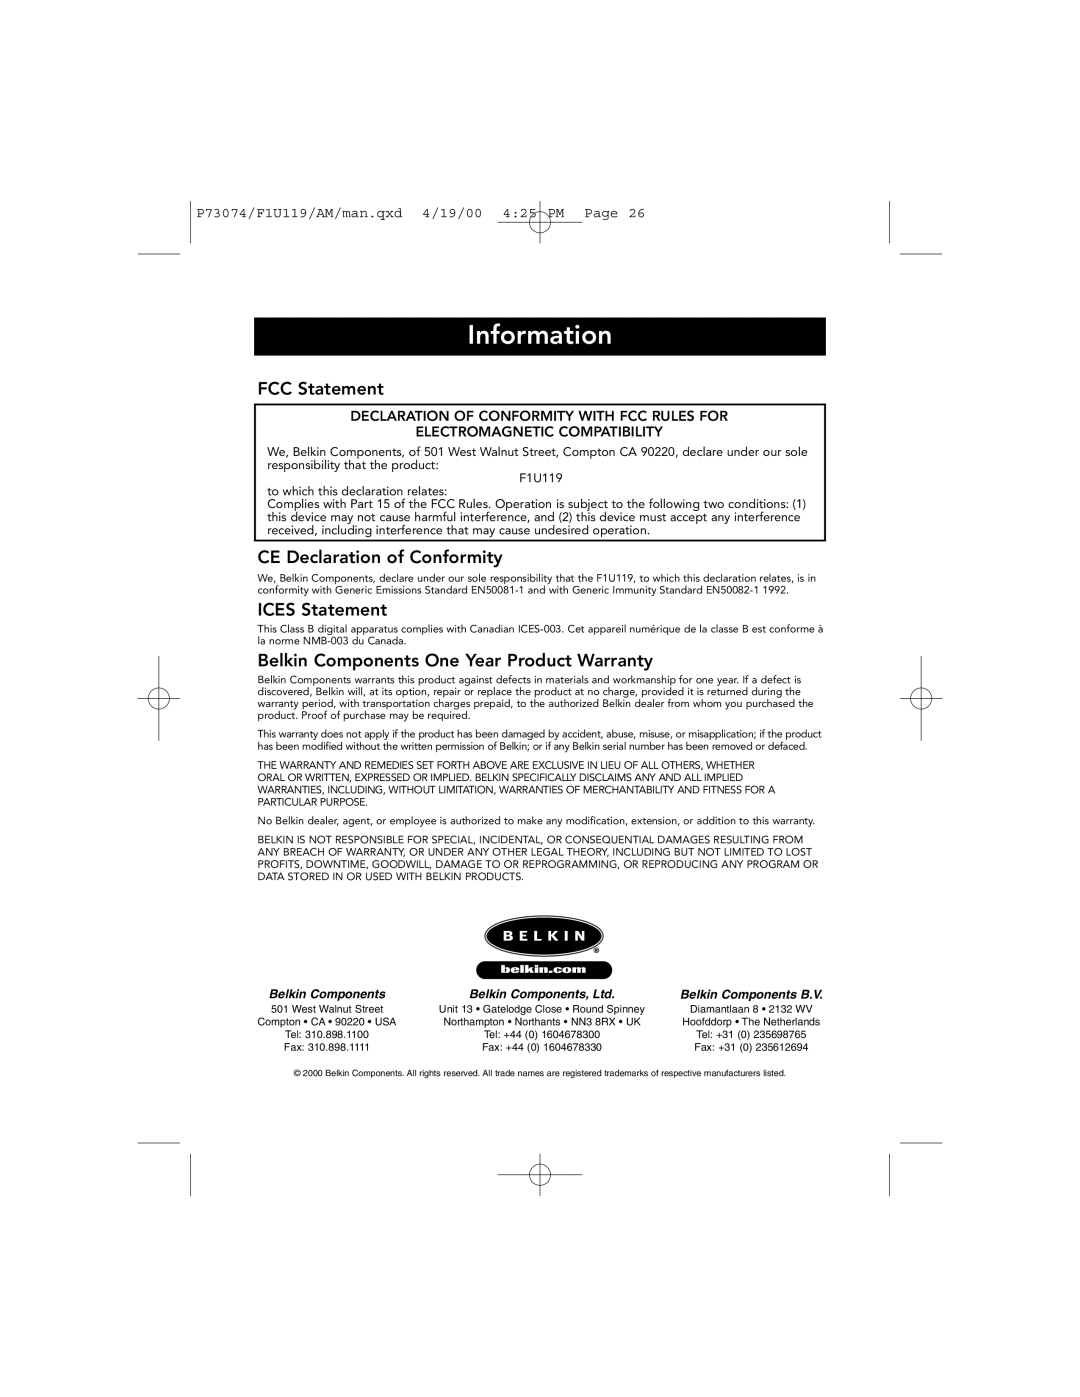 Belkin F1U119 user manual Information, FCC Statement, CE Declaration of Conformity, ICES Statement 